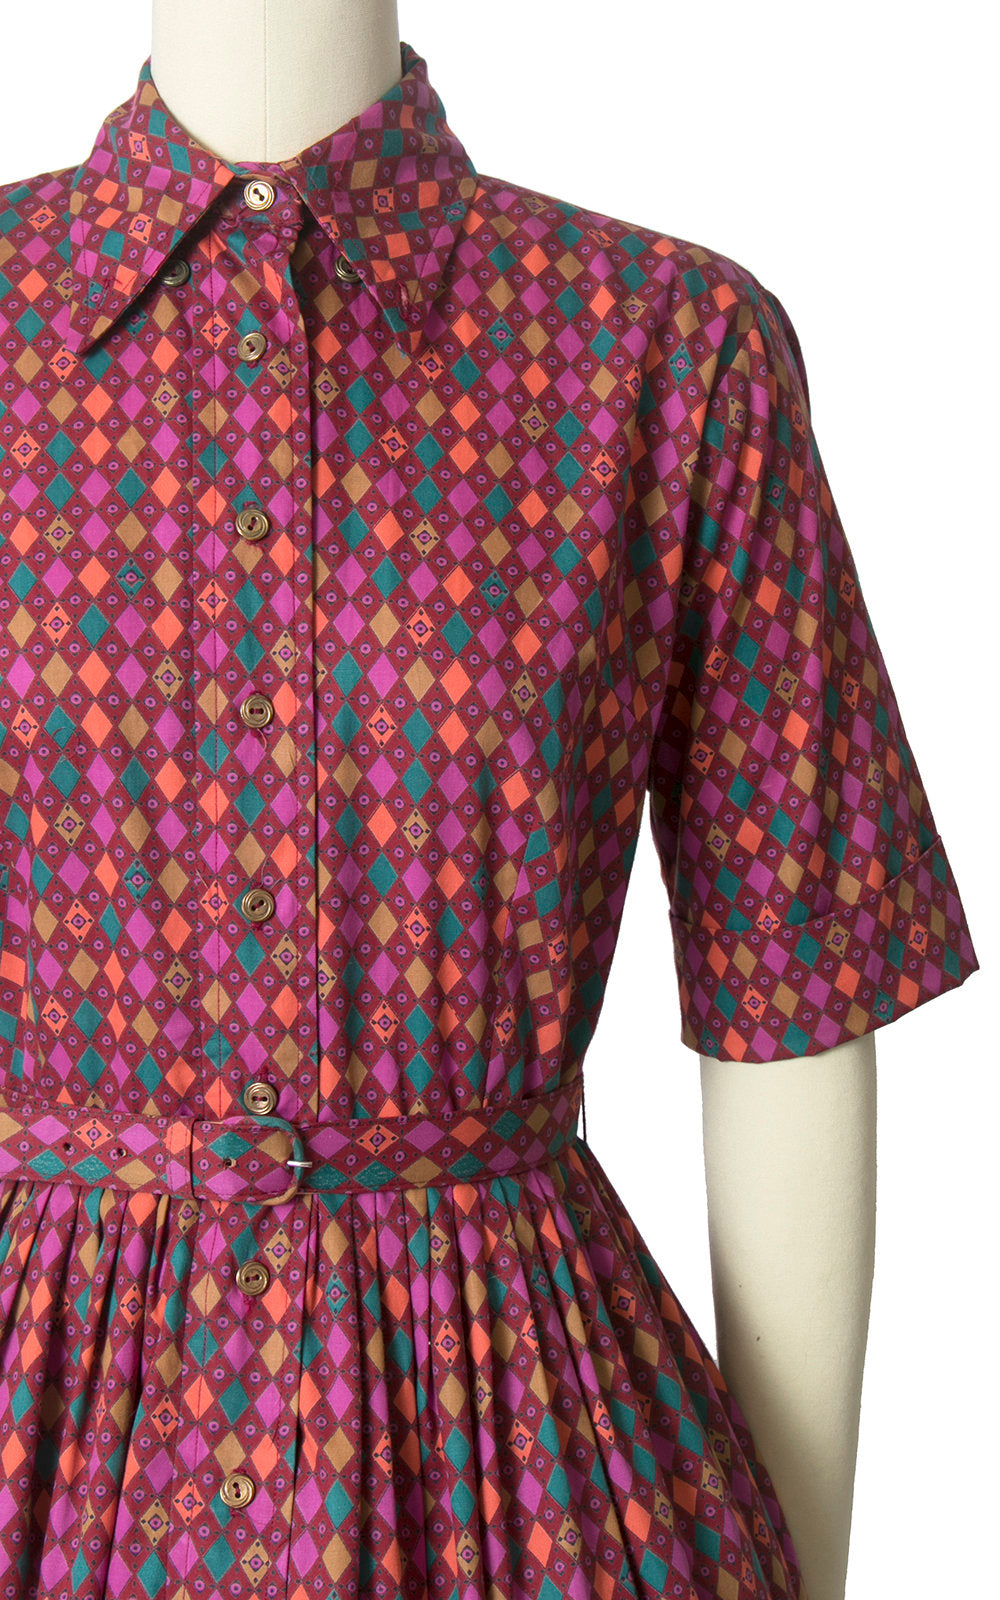 Vintage 1950s Dress | 50s Harlequin Printed Cotton Shirt Dress Full Skirt Shirtwaist Day Dress (small)